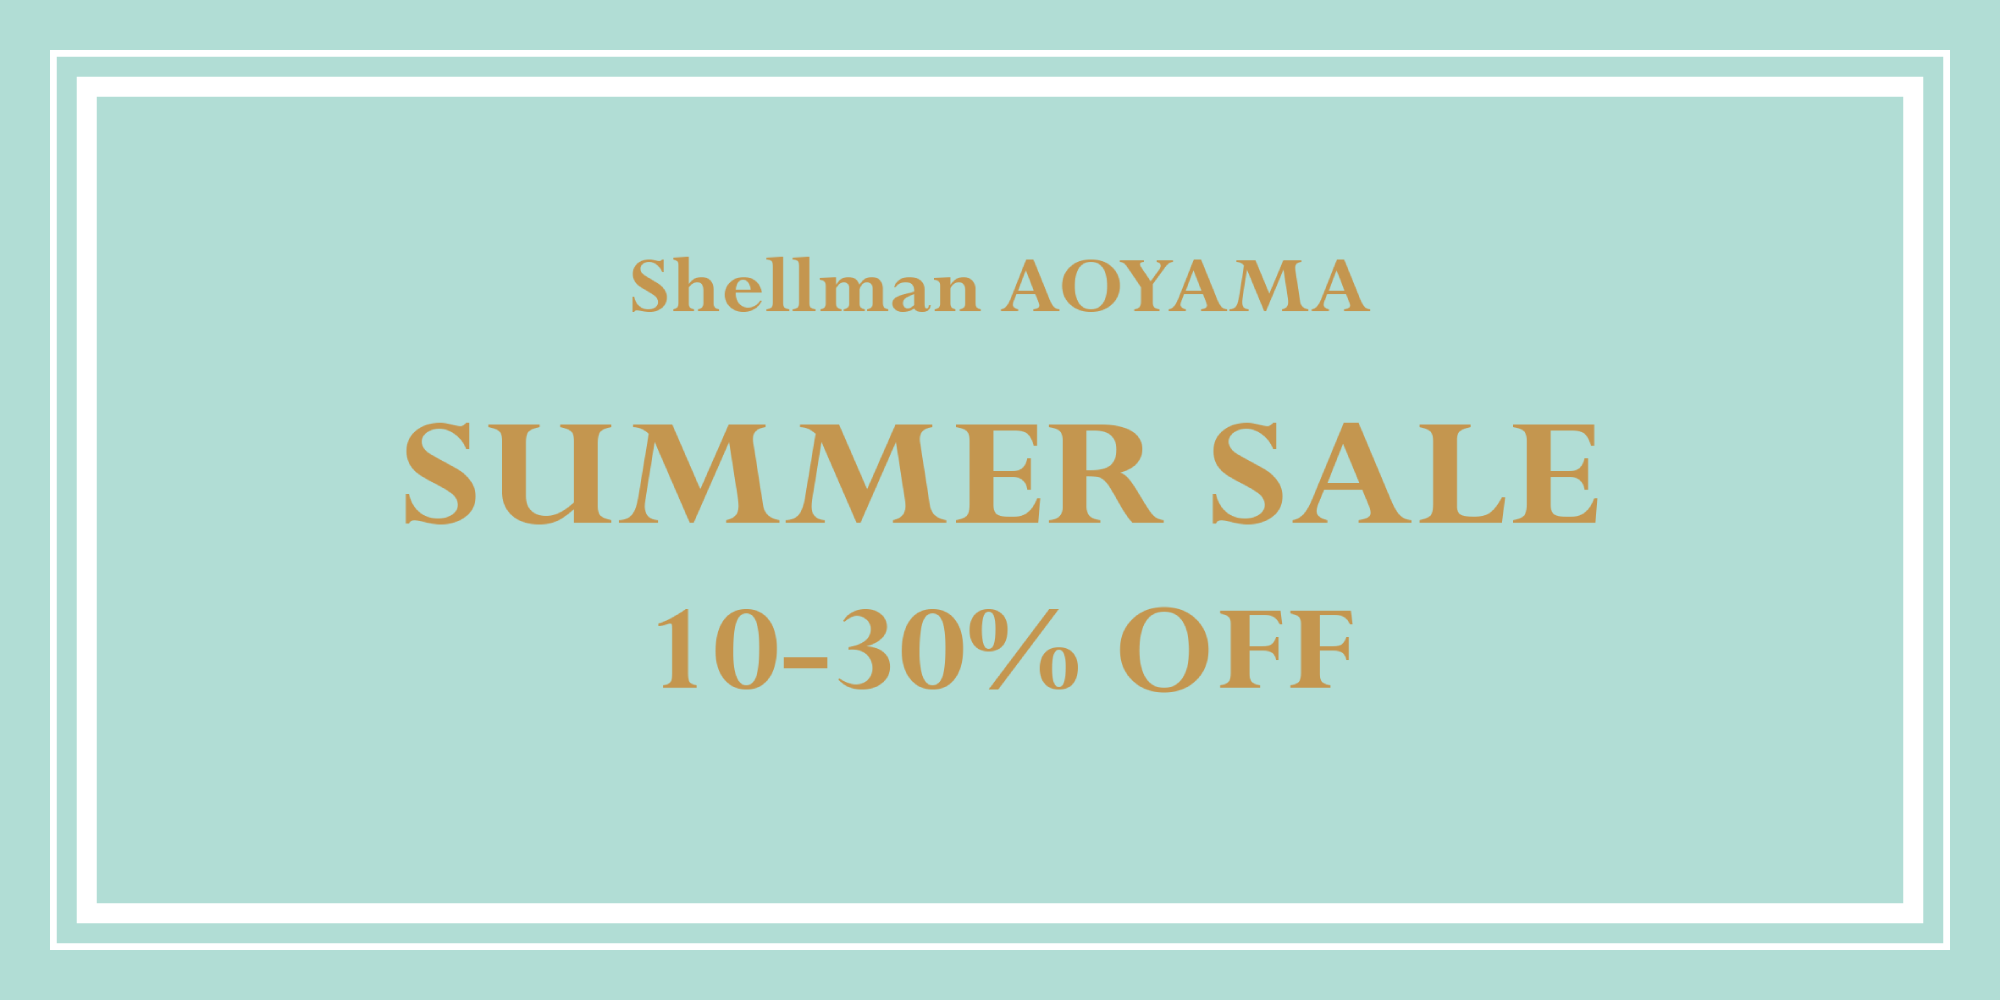 Shellman AOYAMA SUMMER SALE 10-30% OFF